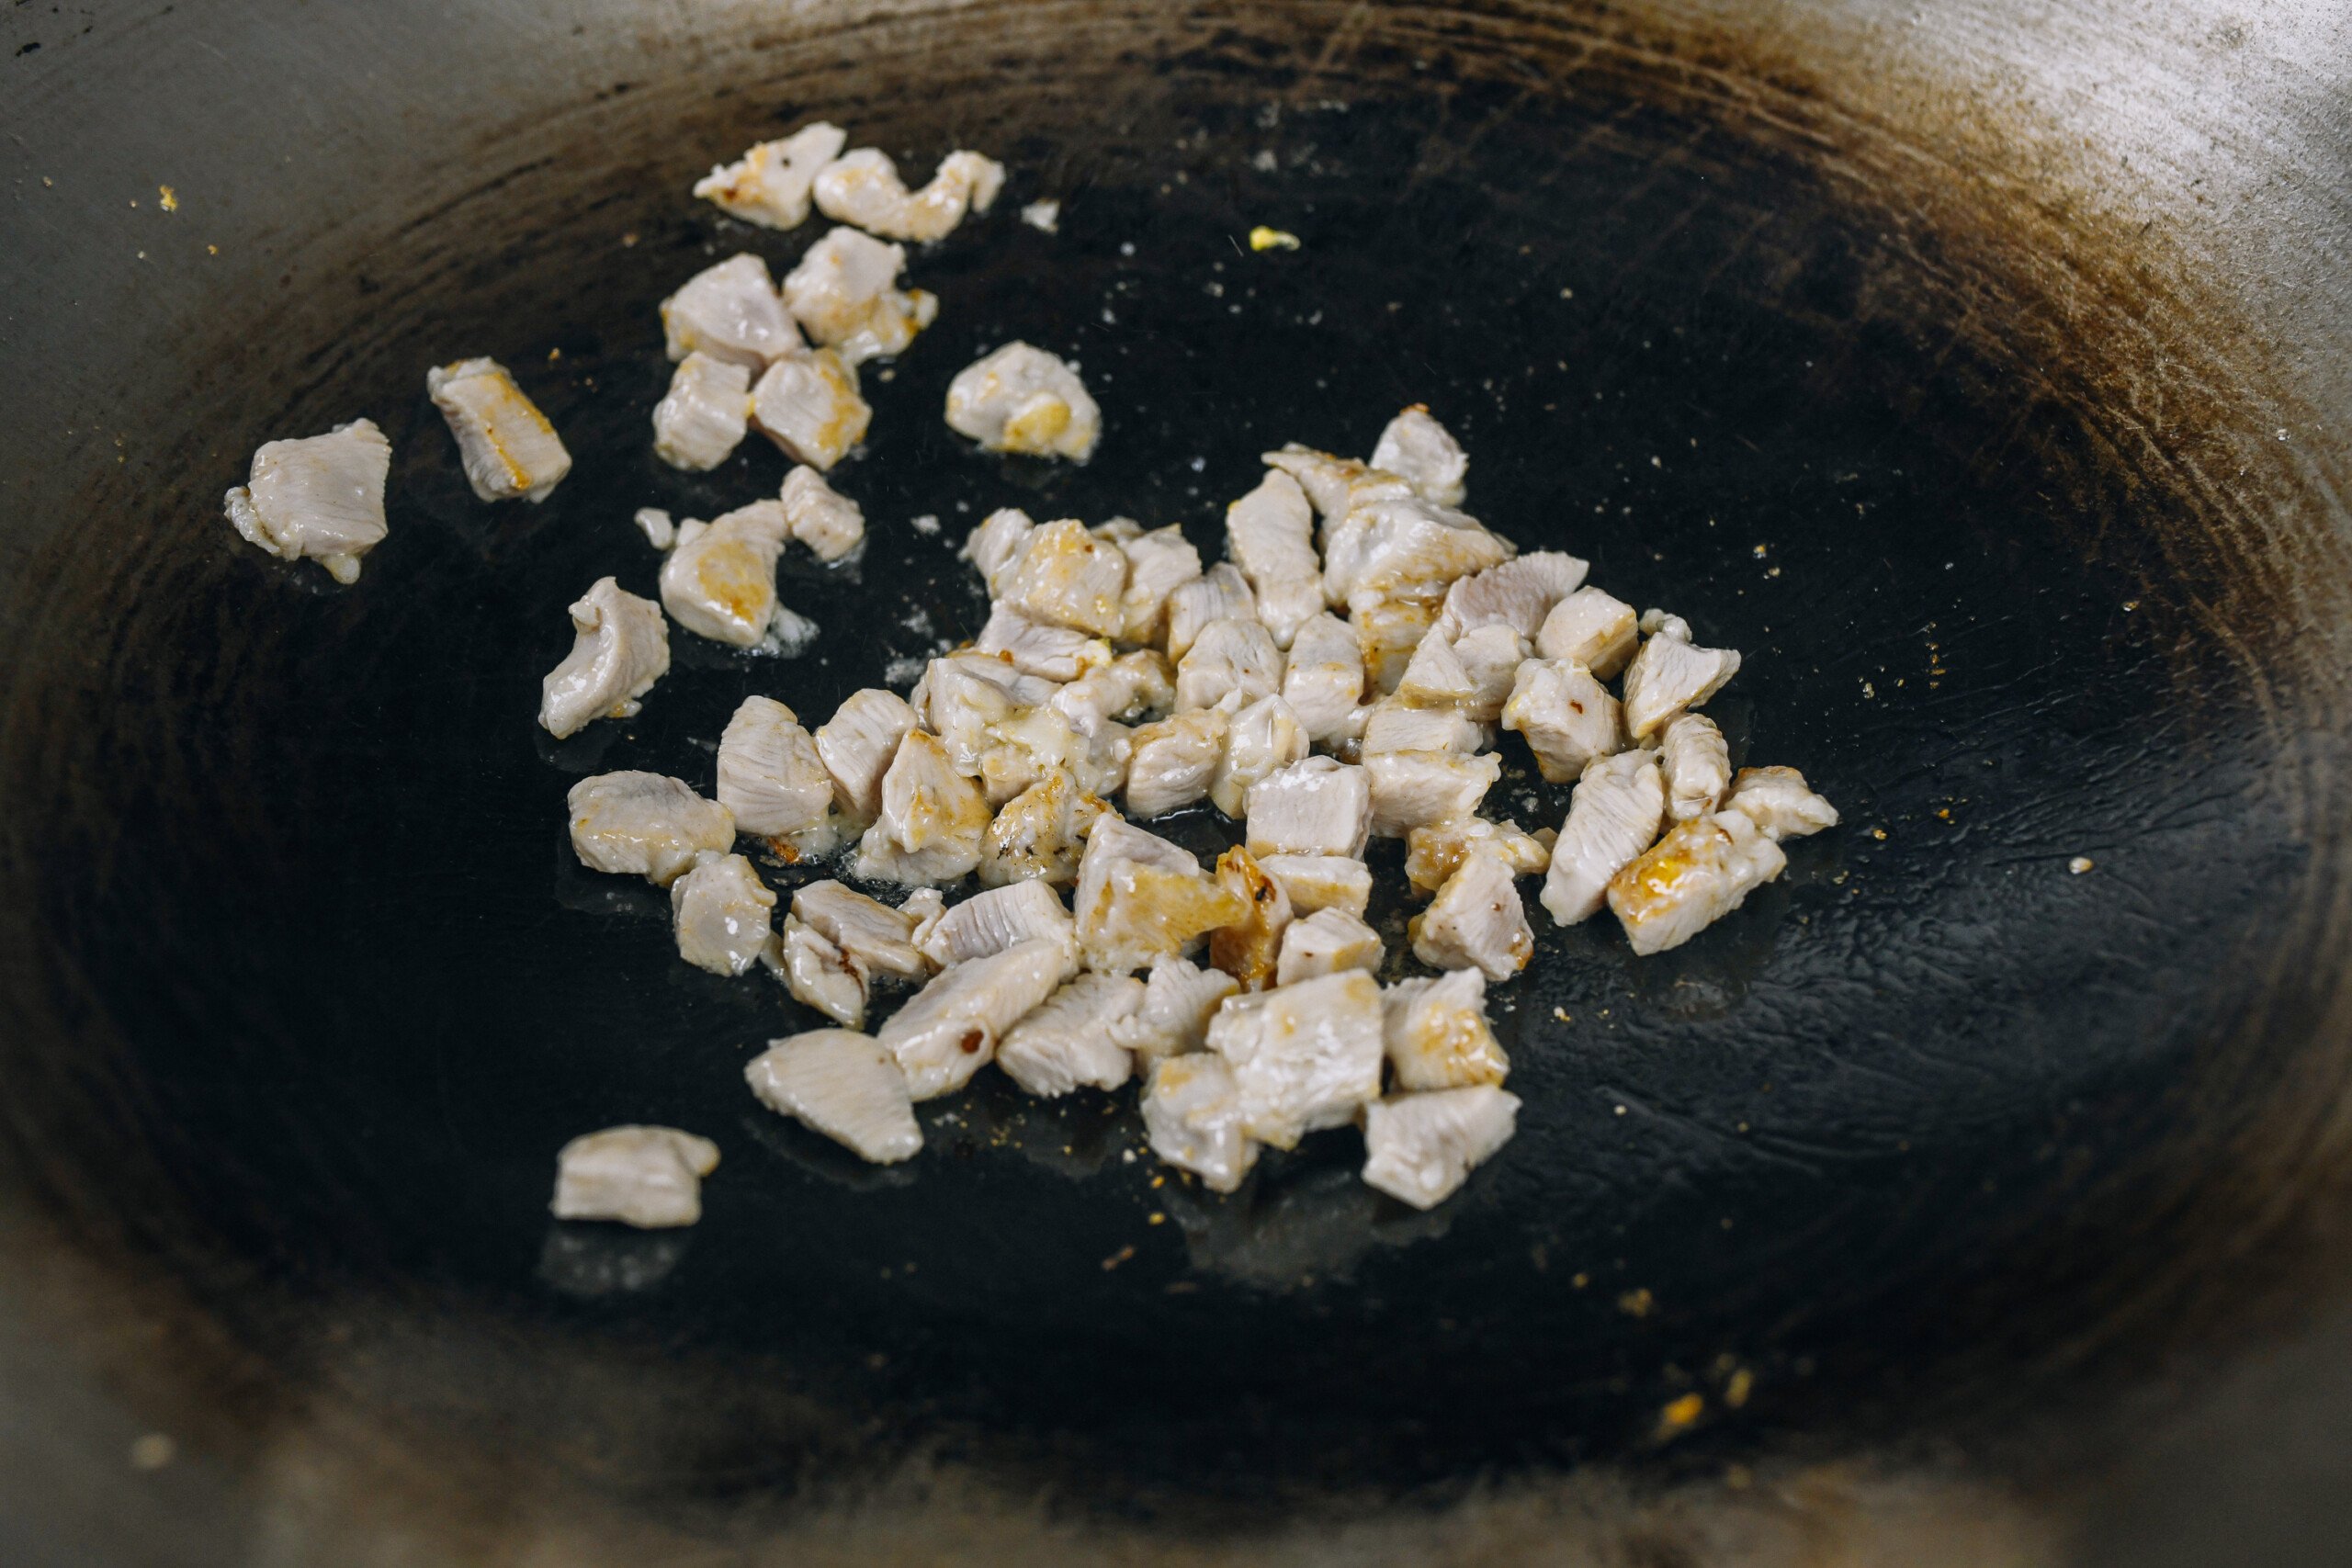 stir-frying cubed chicken breast